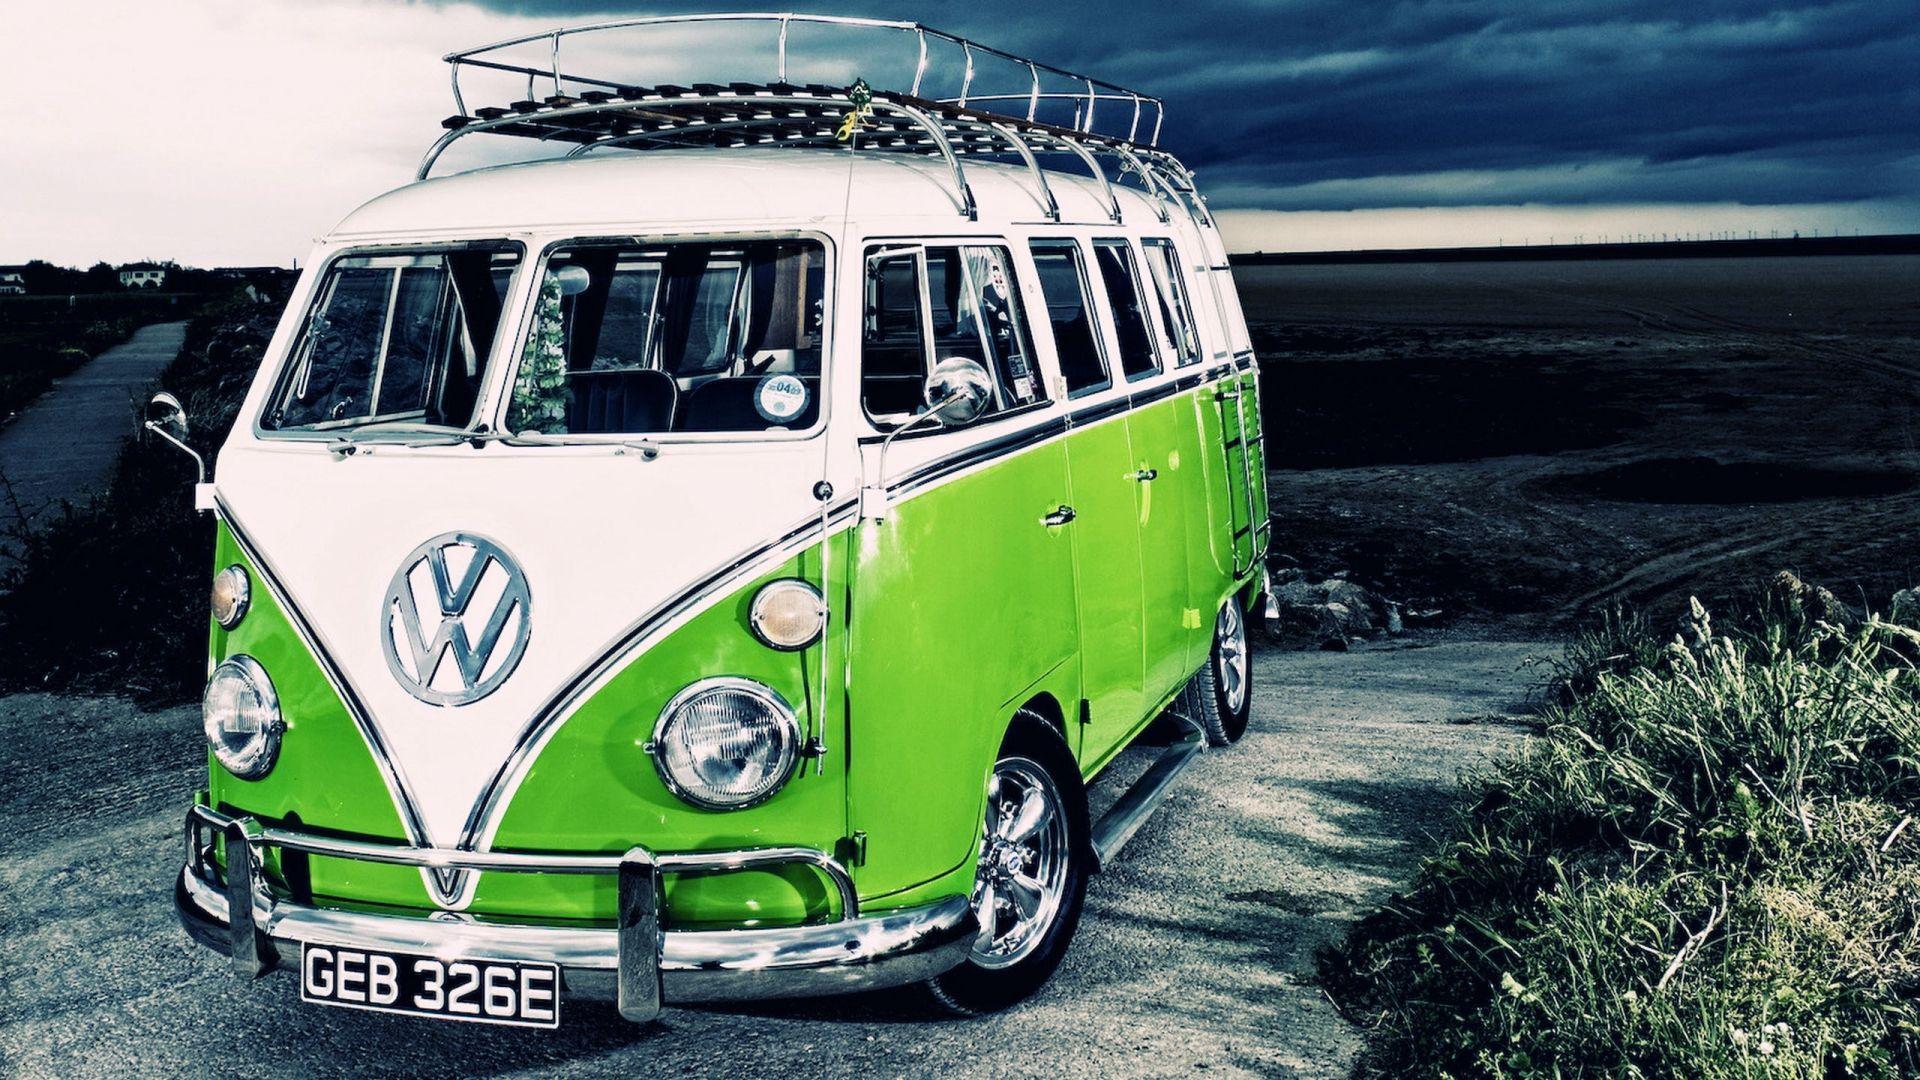 Volkswagen Surf Van Wallpaper. So Freaking Rad, you wouldn't like it!!